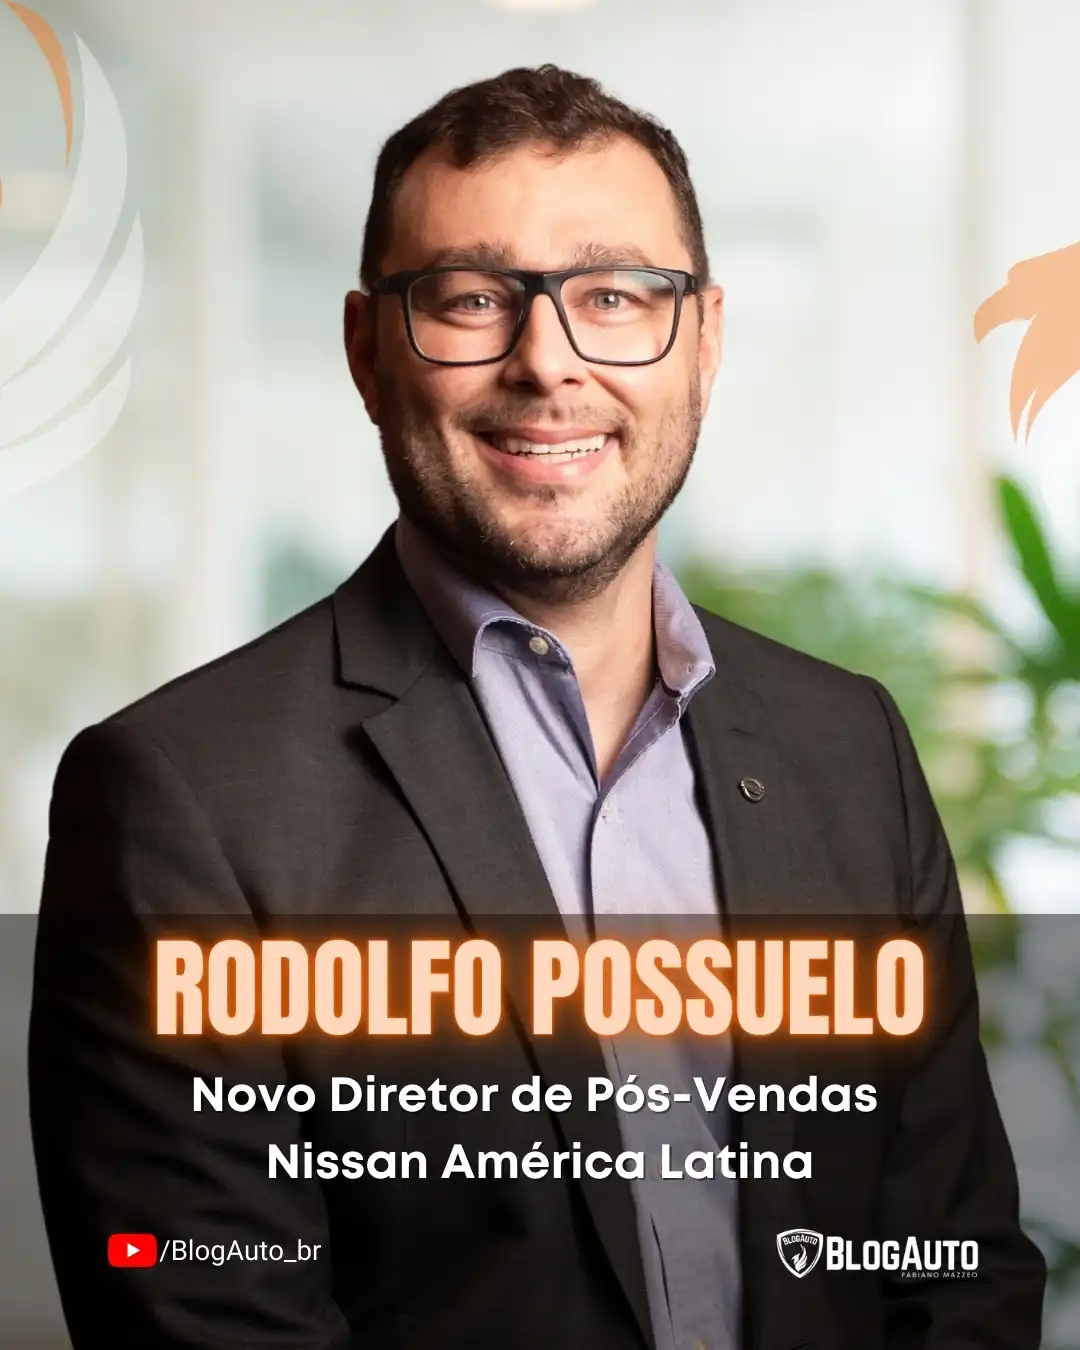 Rodolfo Possuelo